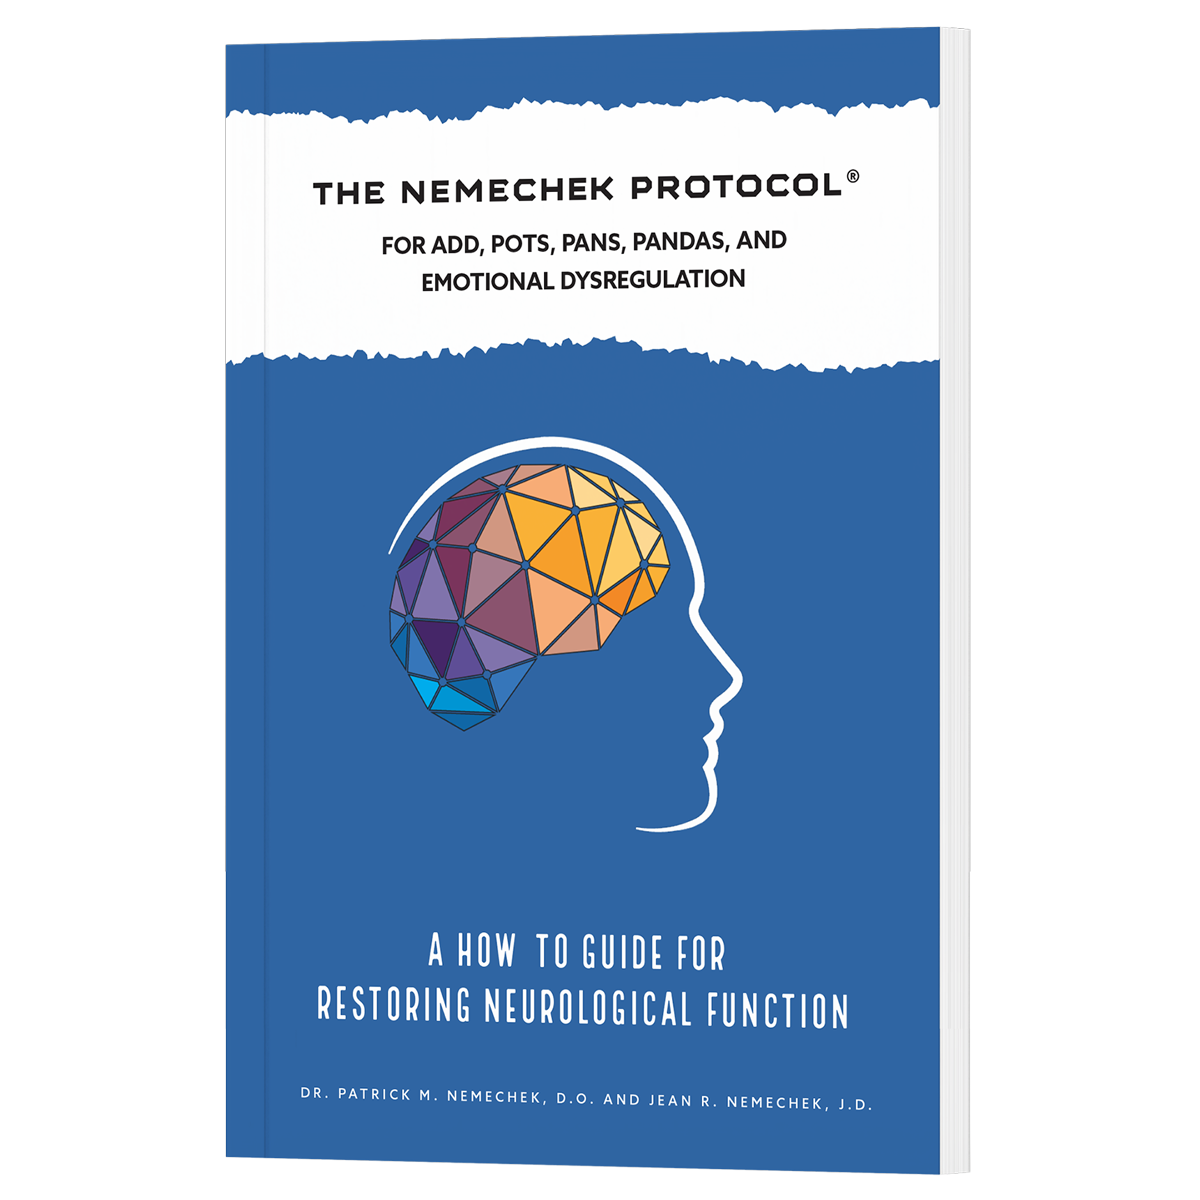 The Nemechek Protocol®, For ADD, POTS, PANS, PANDAS and Emotional Dysregulation, Softback Print